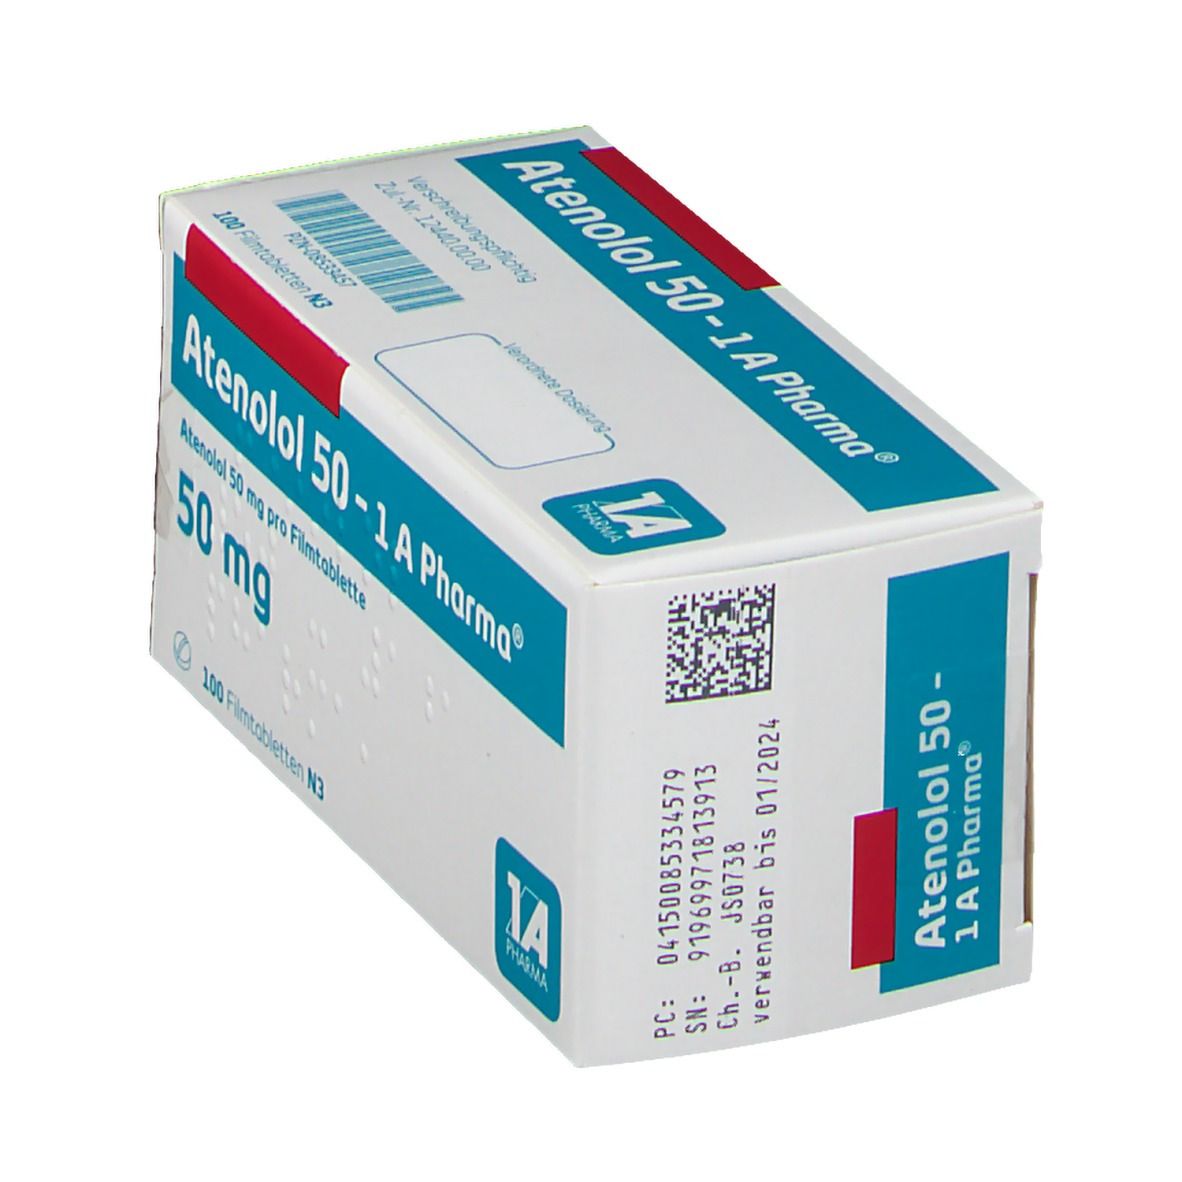 Atenolol 50 1A Pharma®